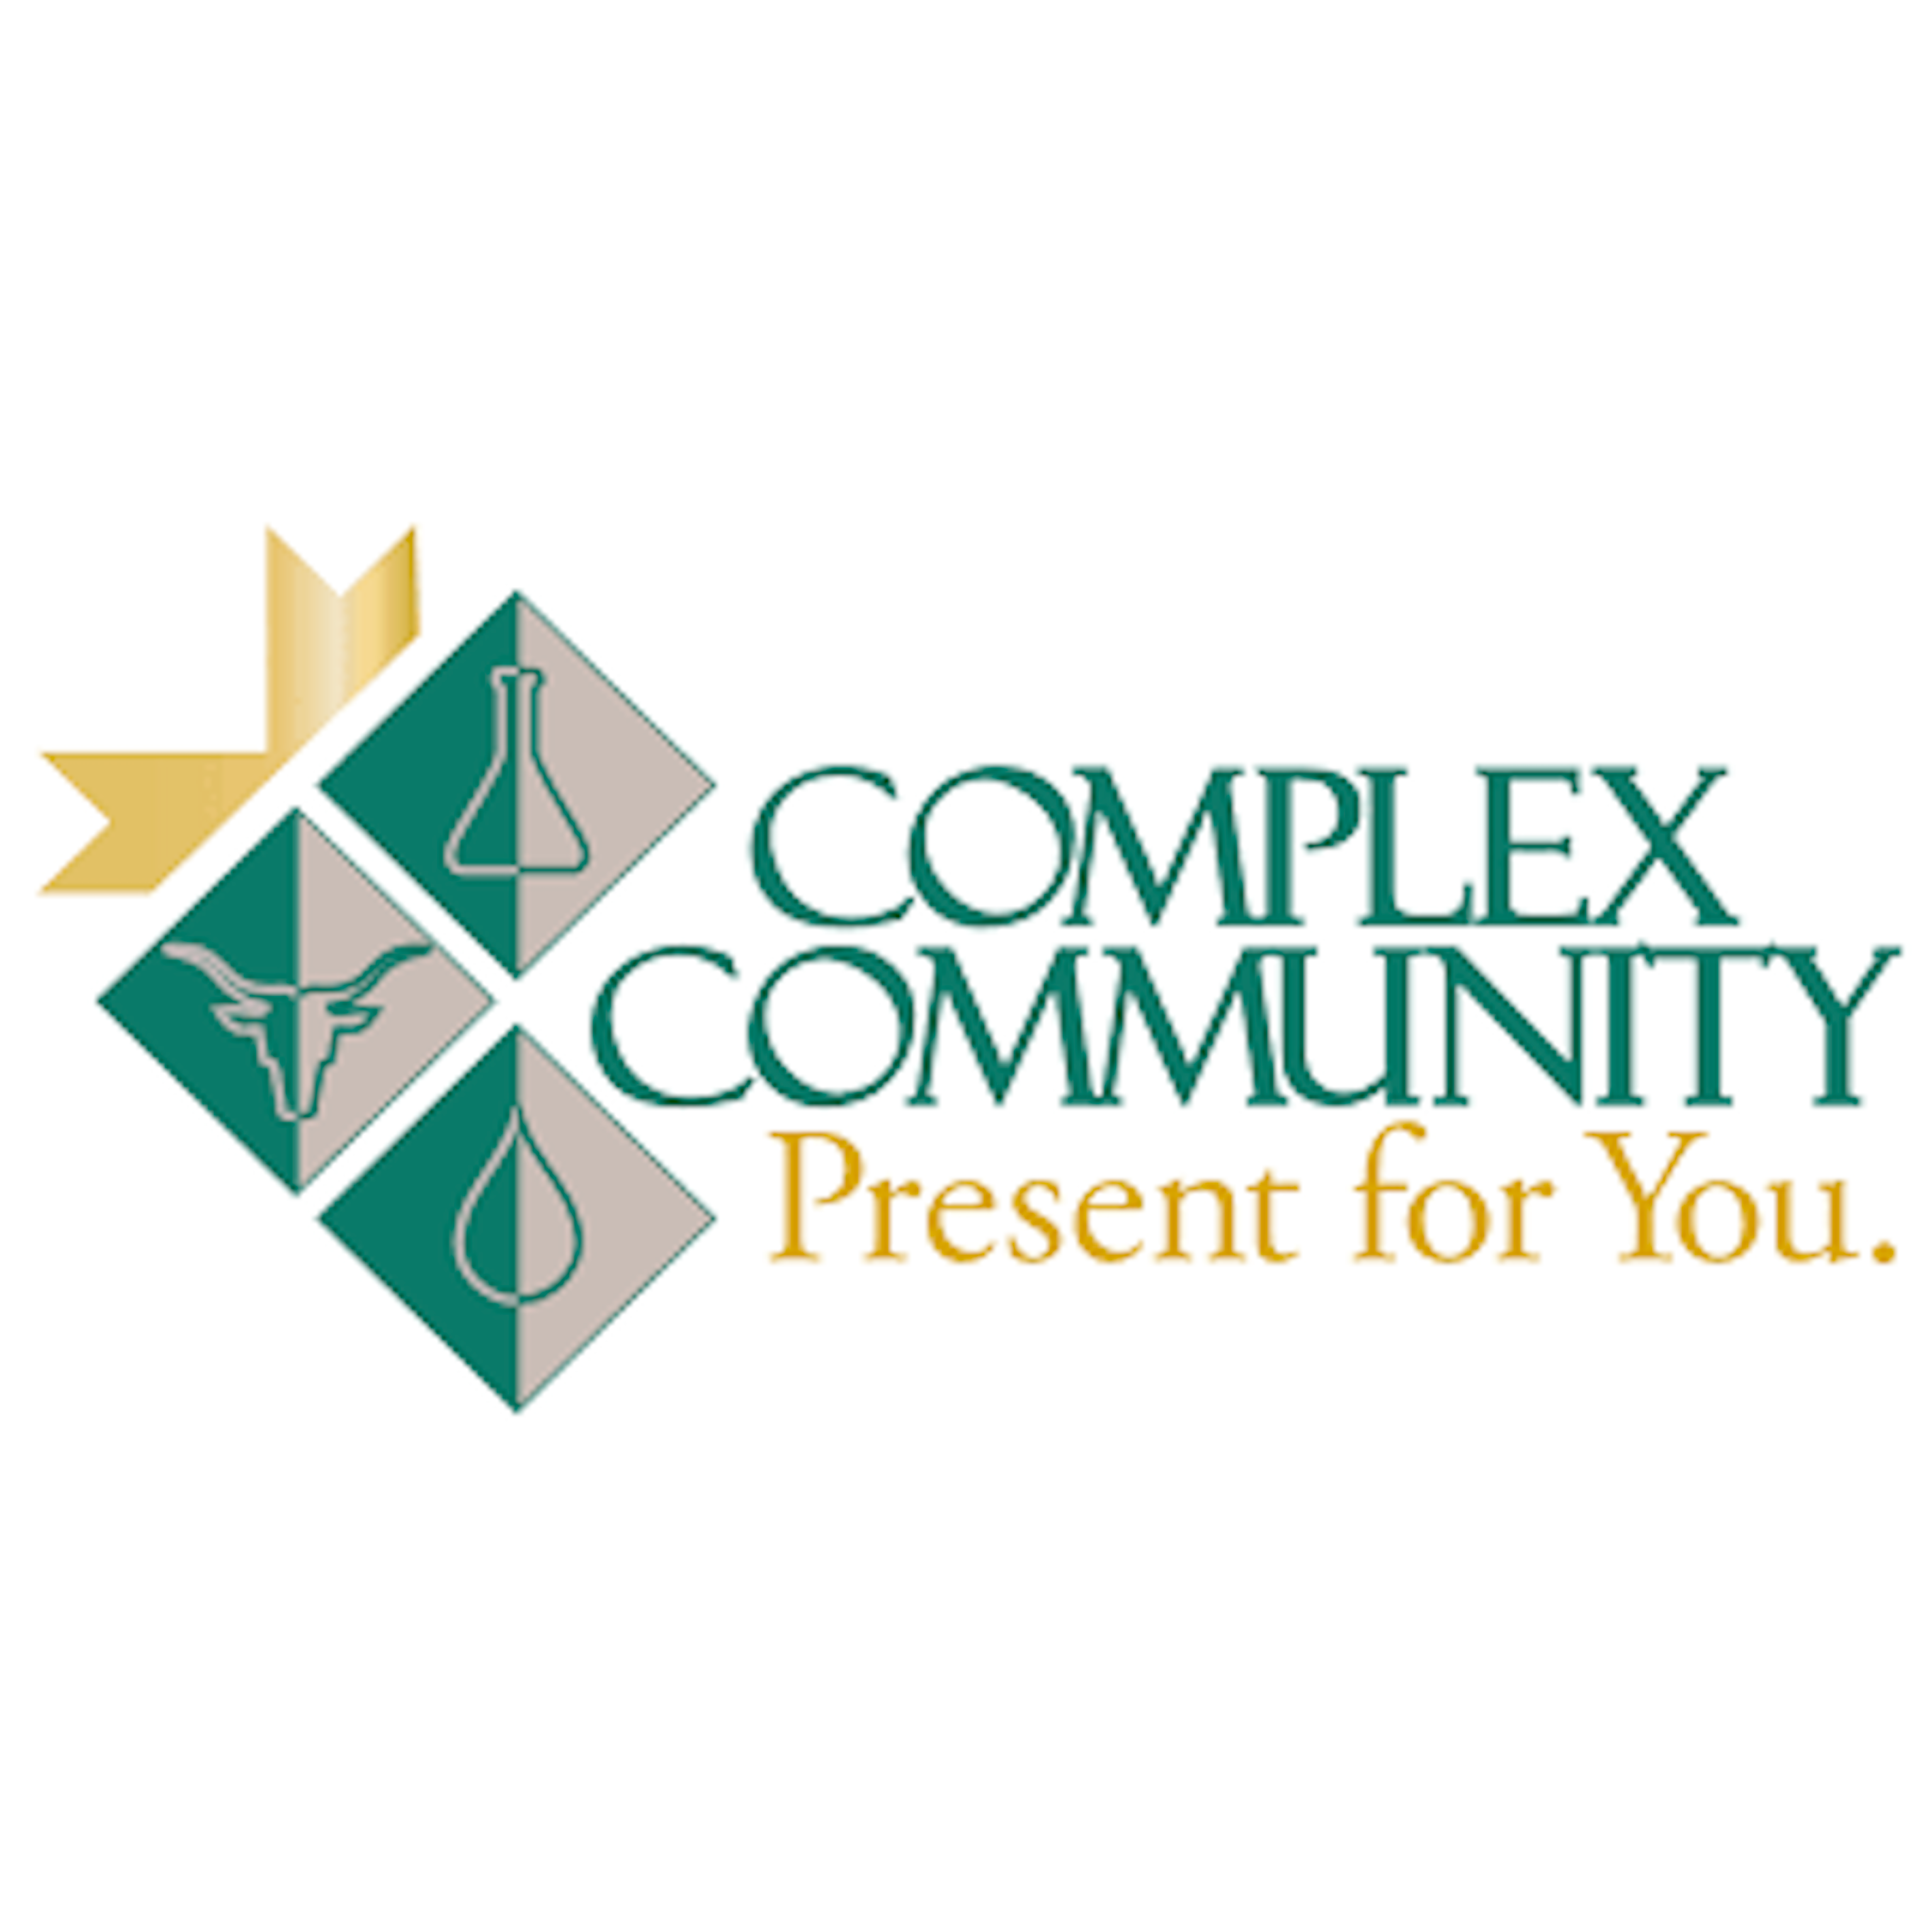 Complex Community Federal Credit Union Big Spring - Big Spring, TX 79720 - (432)550-9126 | ShowMeLocal.com